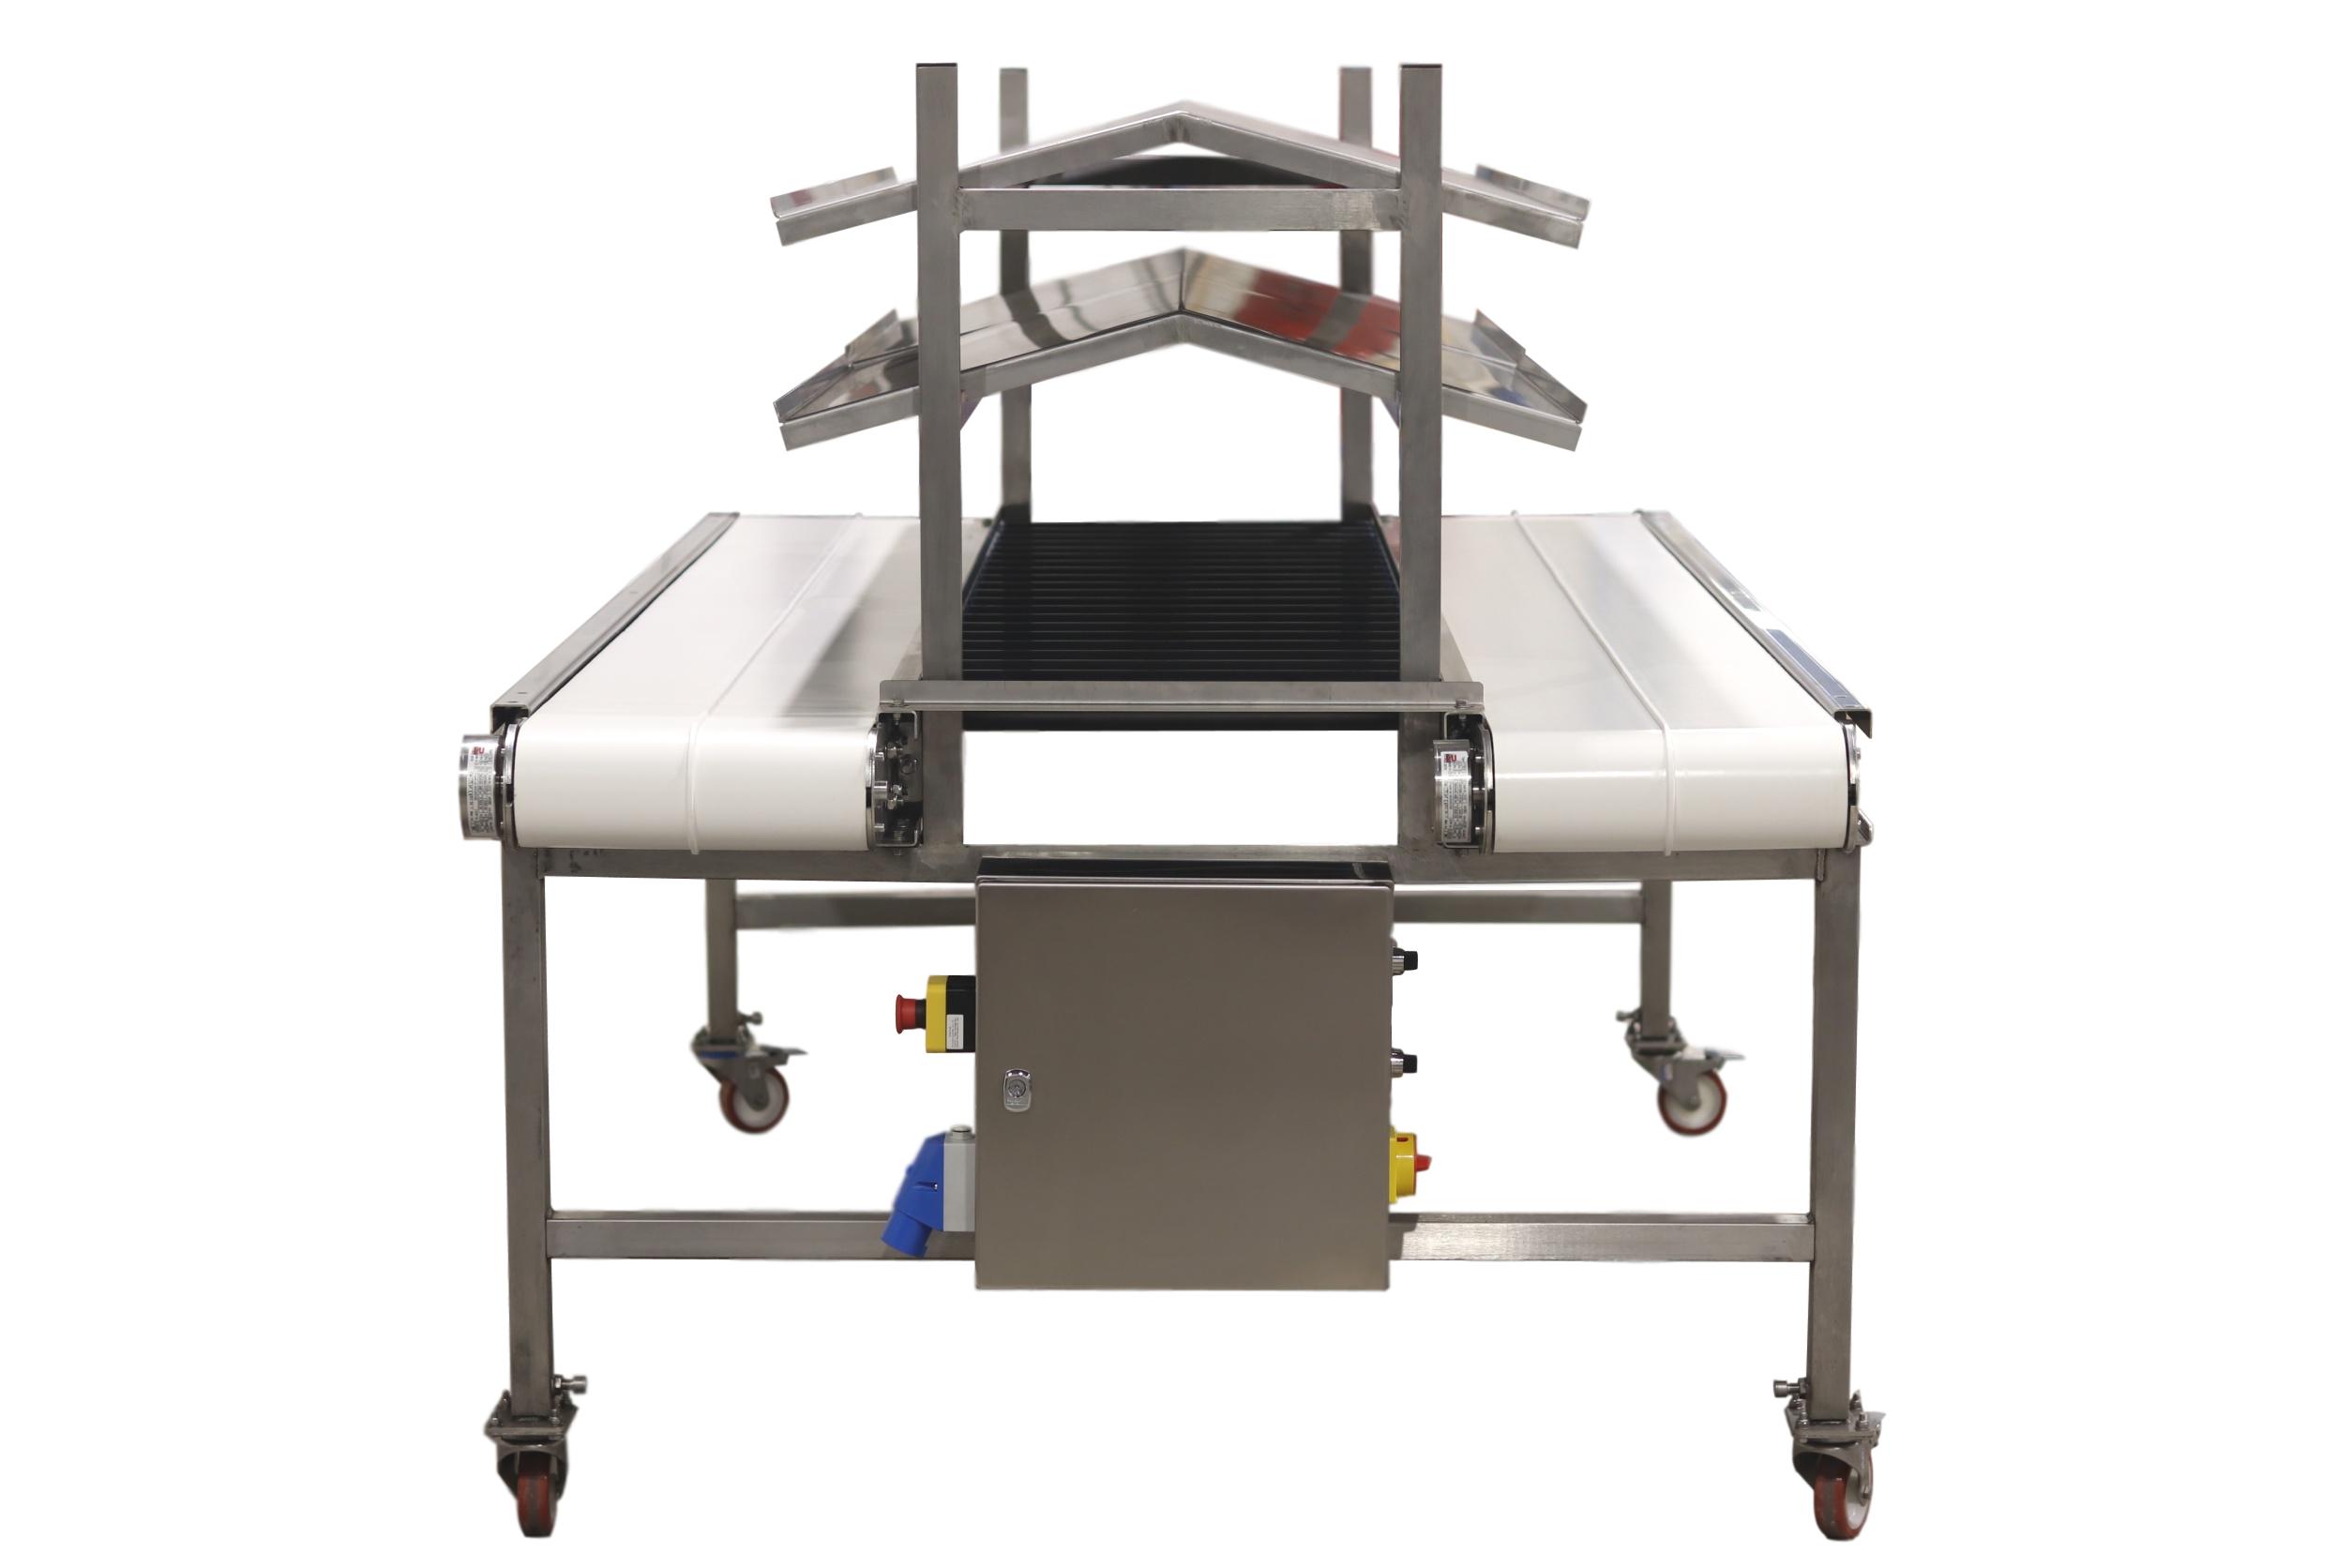 Stainless Belt Conveyors Custom Conveyors Special Conveyors made to order conveyors tailor made conveyors conveyor design